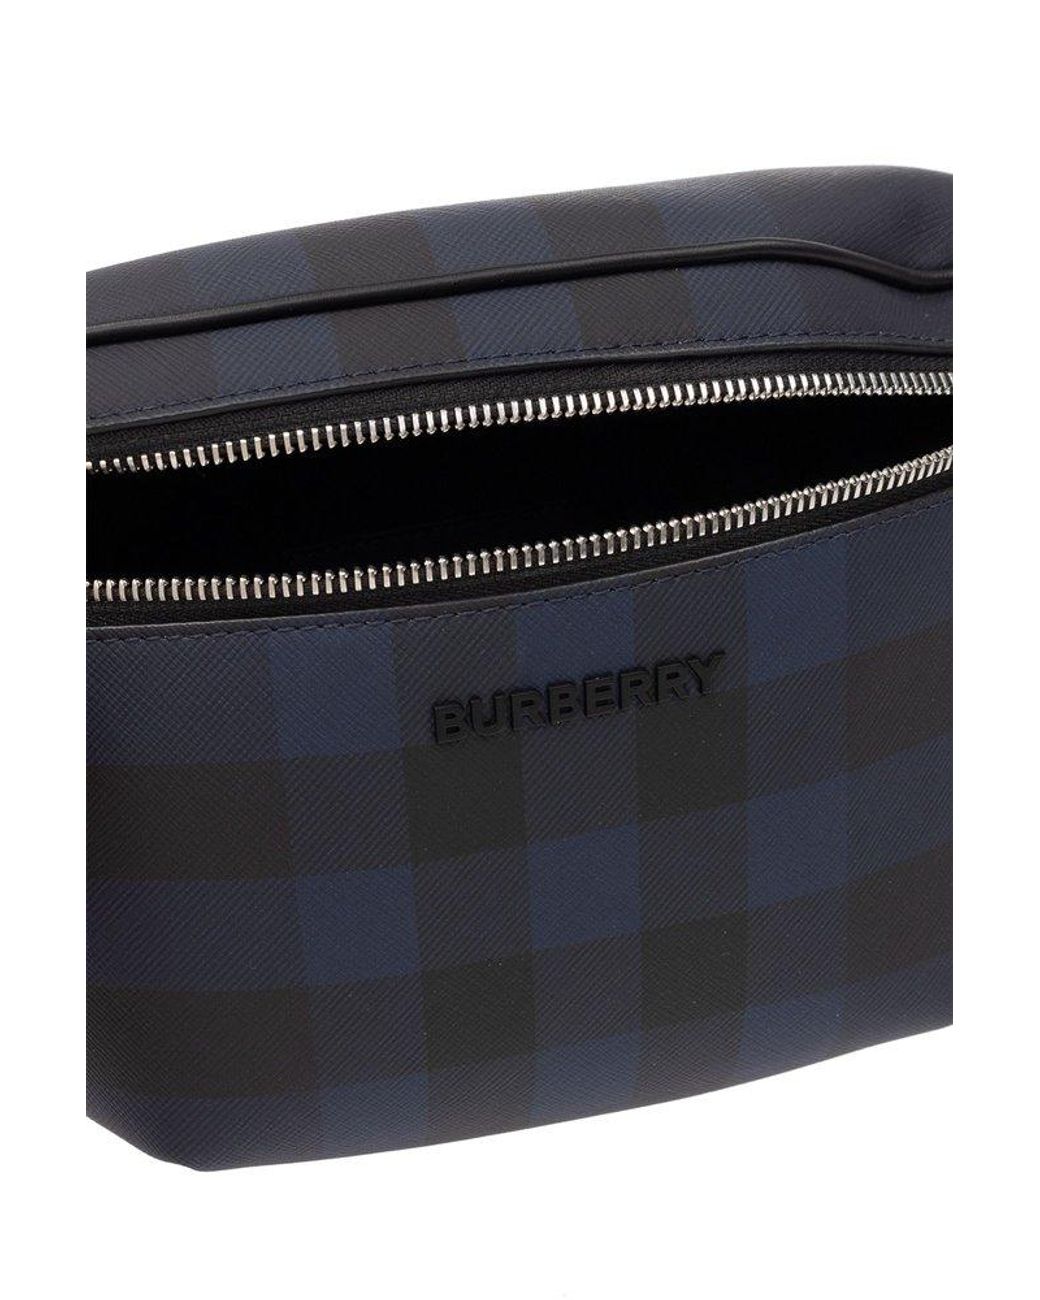 Burberry 'cason' Belt Bag in Blue for Men